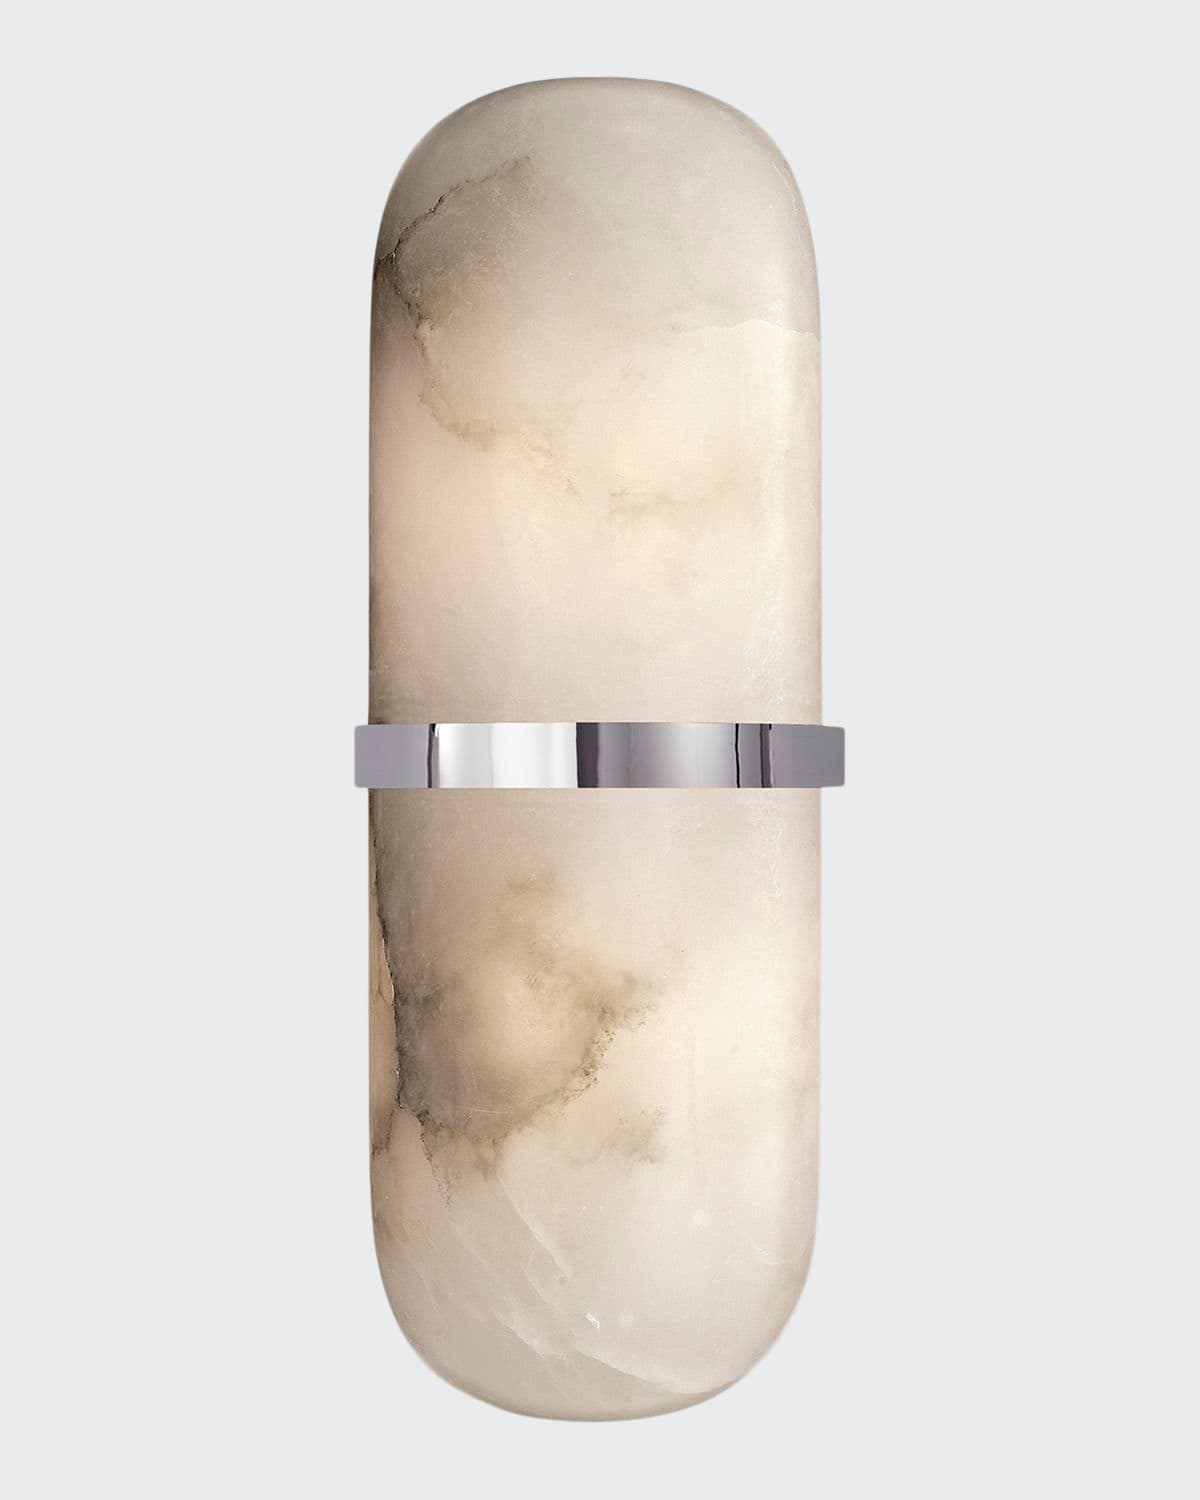 Kelly Wearstler For Visual Comfort Signature Melange Pill Form Sconce In Polished Nickel